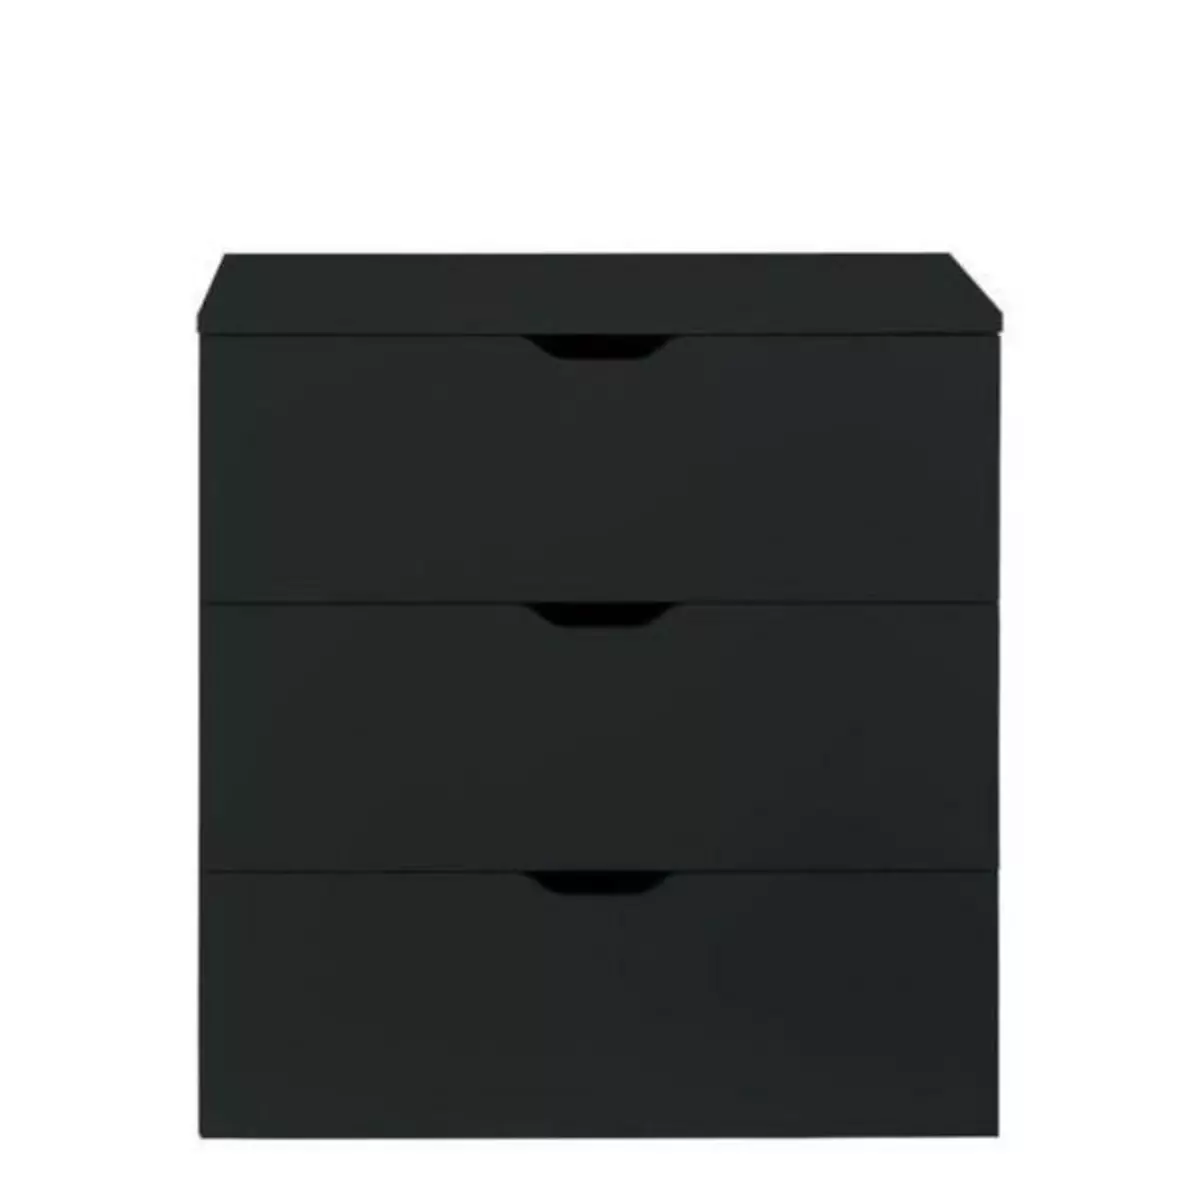  Commode - Meuble  BASIX - 3 tiroirs - Mélaminé Noir mat - L 78 x P 40 x H 80 cm - Noir mat